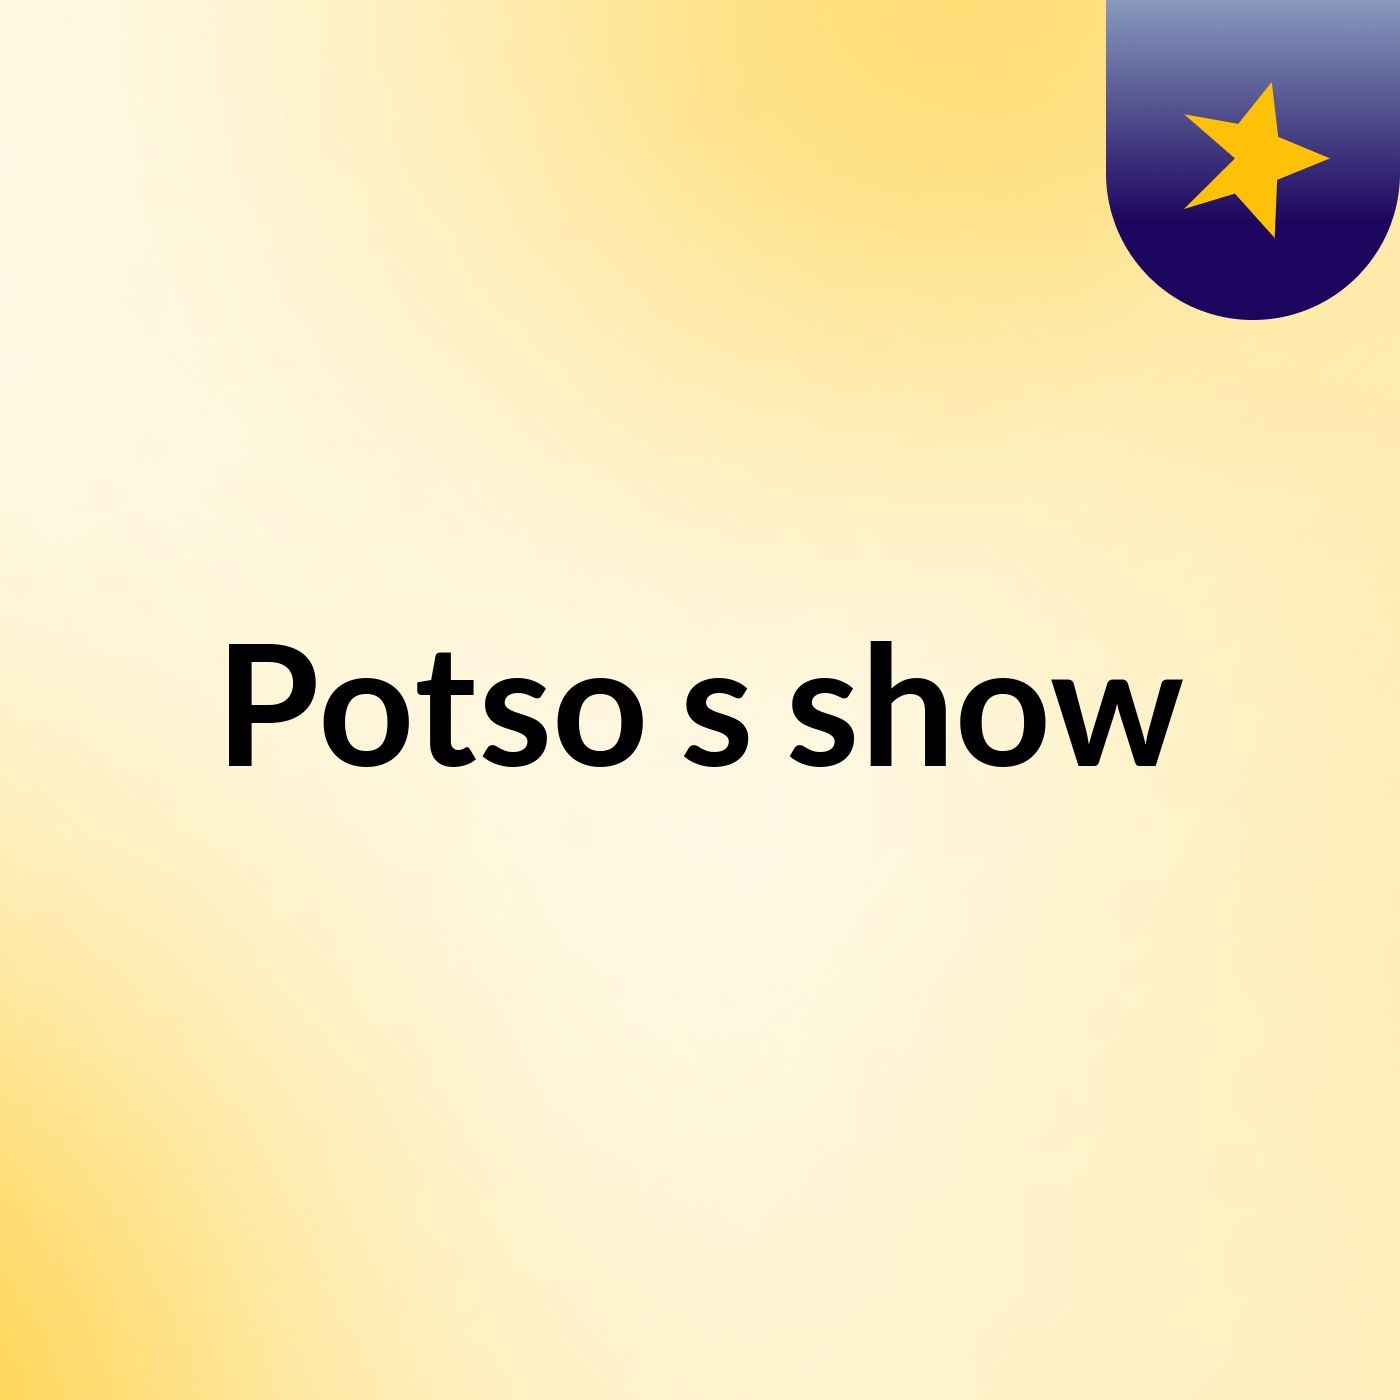 Potso's show